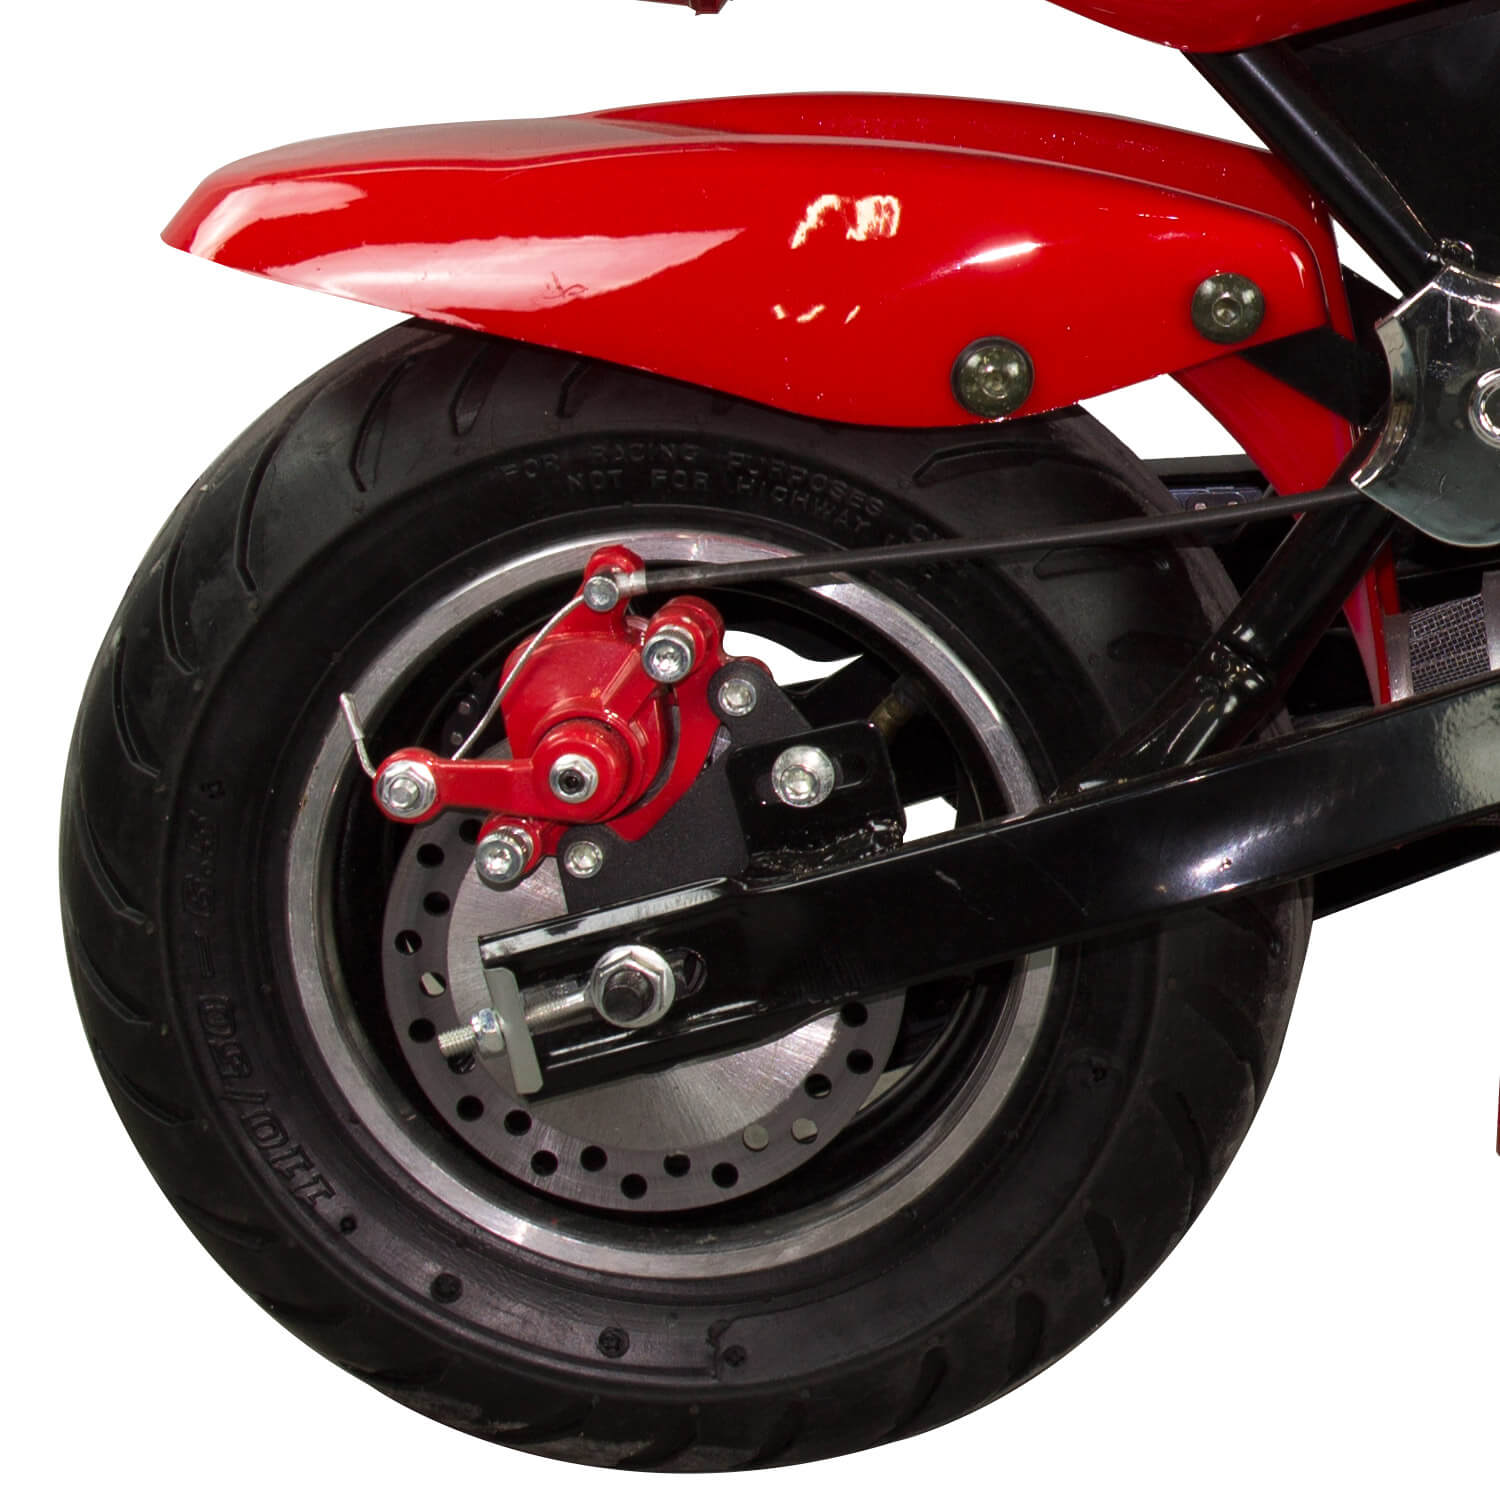 Super Mini Moto Ninja Gasolina 49cc 0 KM Aro 6,5 2T Freio a Disco - TMN4917  - Tander